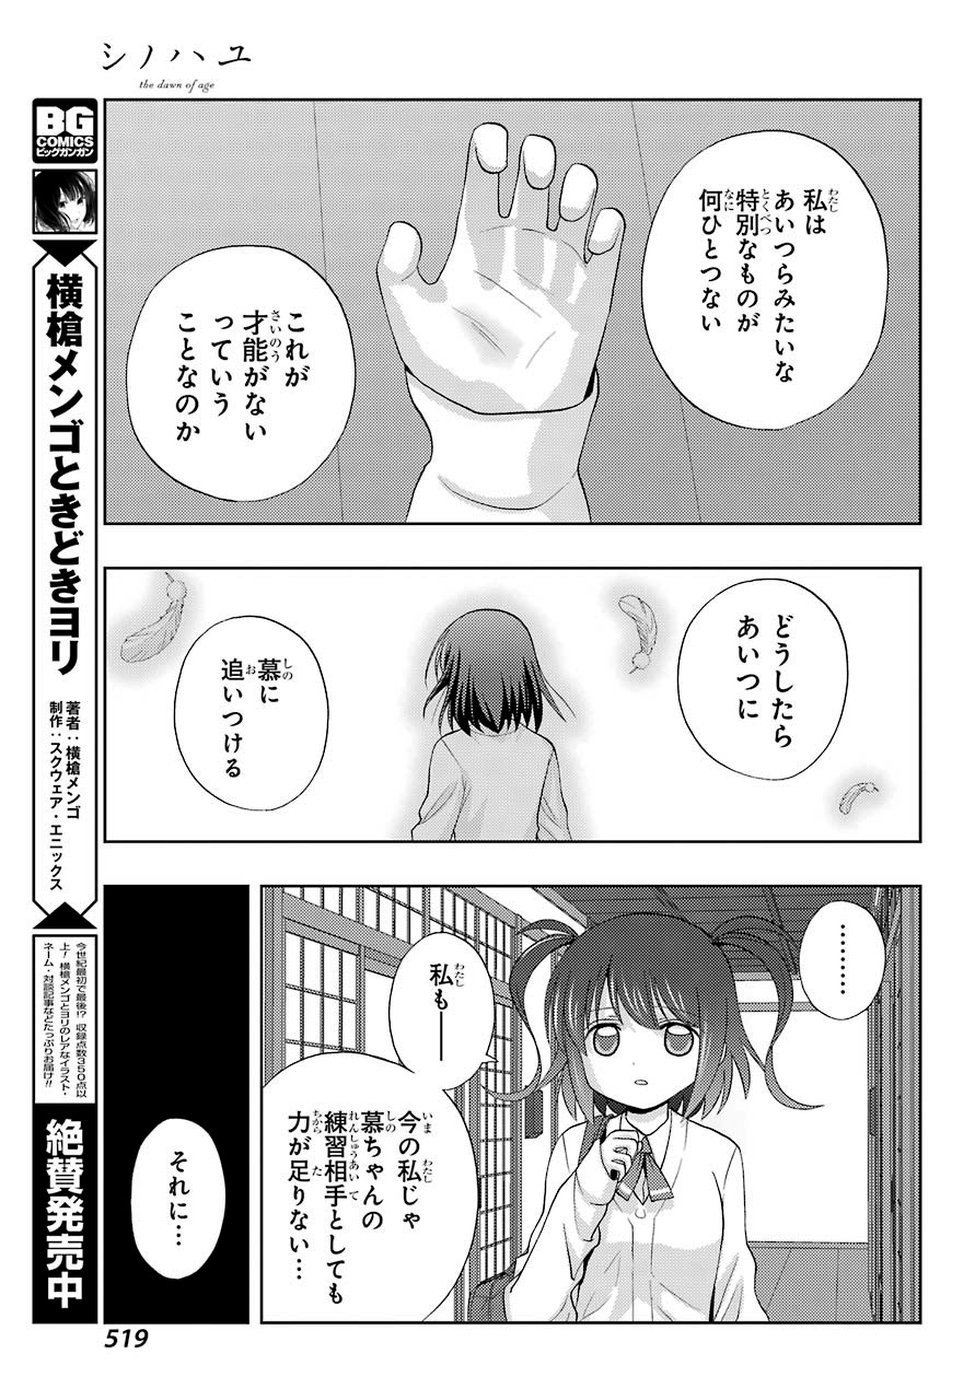 Shinohayu - The Dawn of Age Manga - Chapter 070 - Page 28